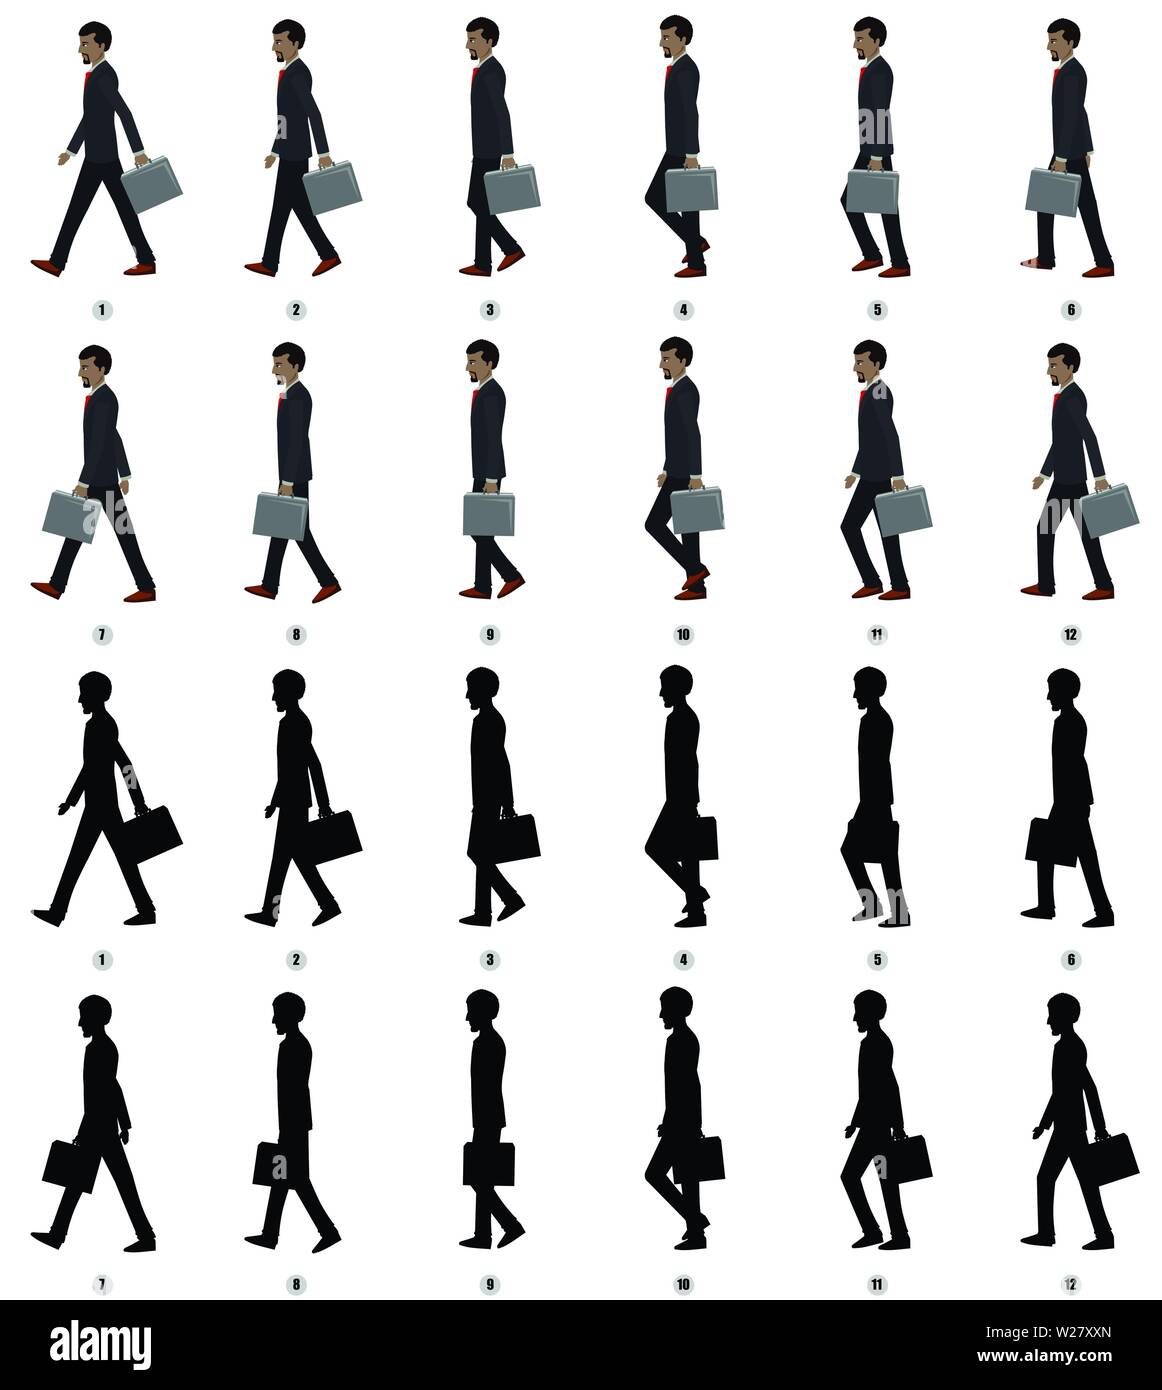 Businessman walk cycle animation sequense vector, loop animation